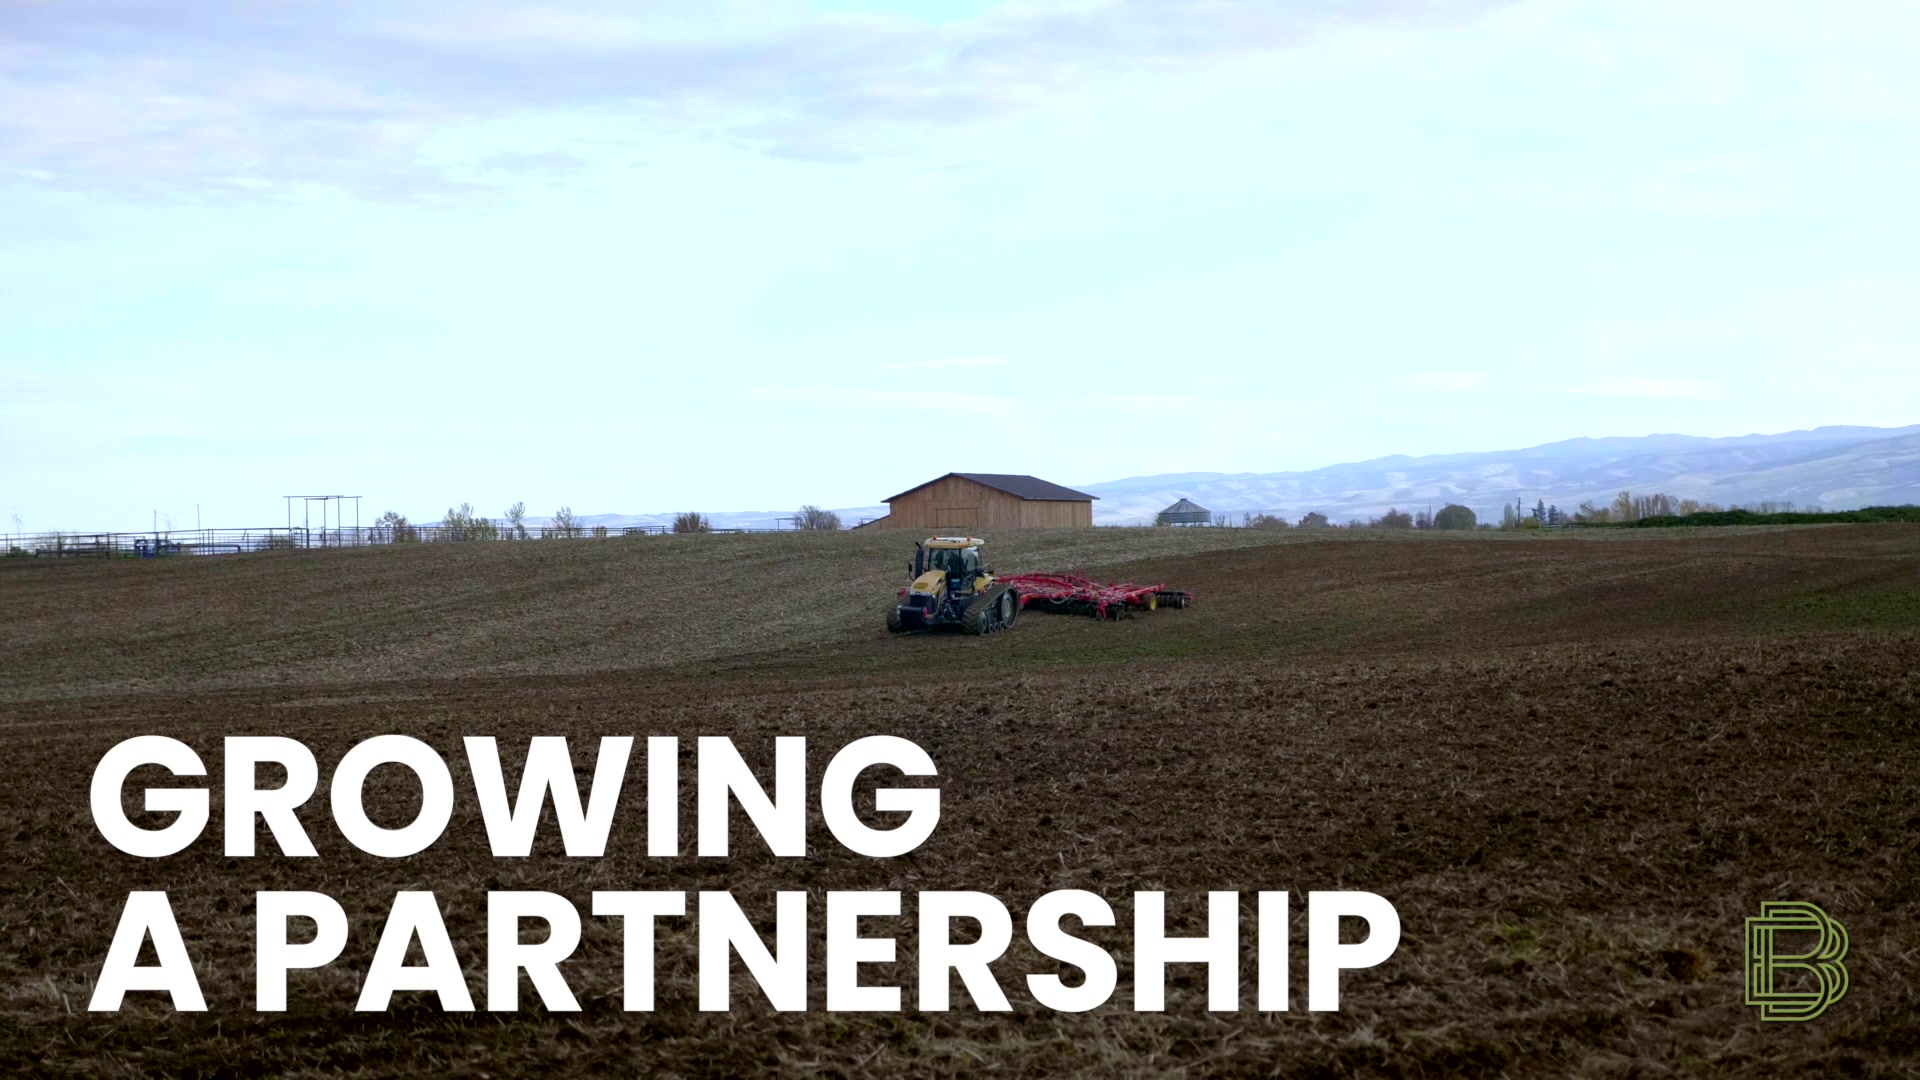 Growing a partnership video still